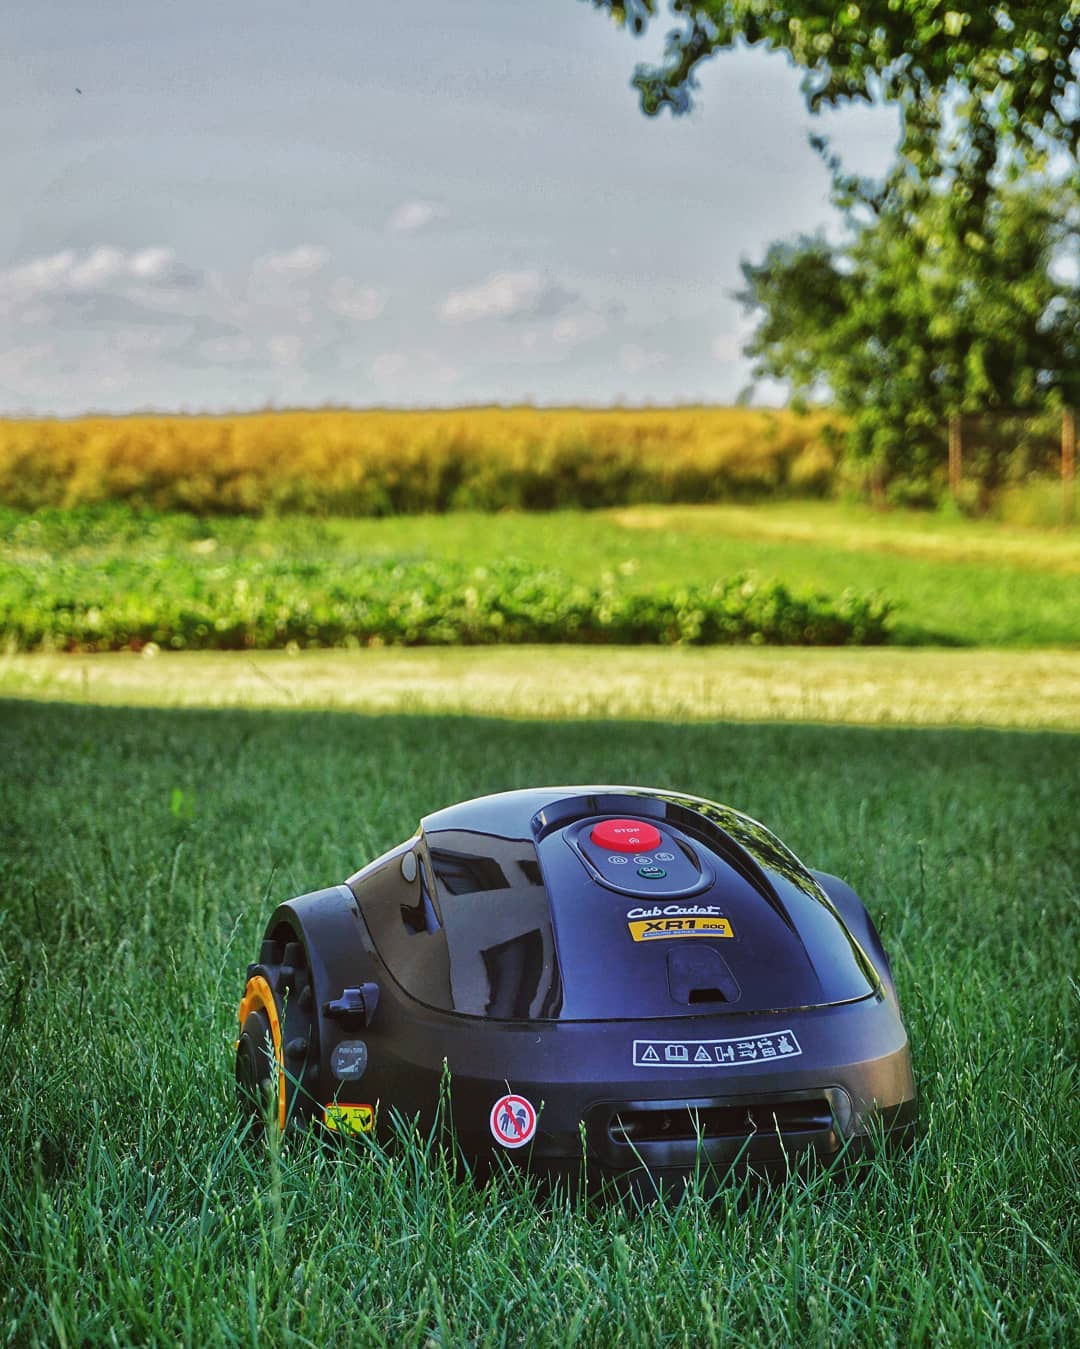 smart robot lawn mower mowing the lawn photo by Instagram user @bez.ogrodek